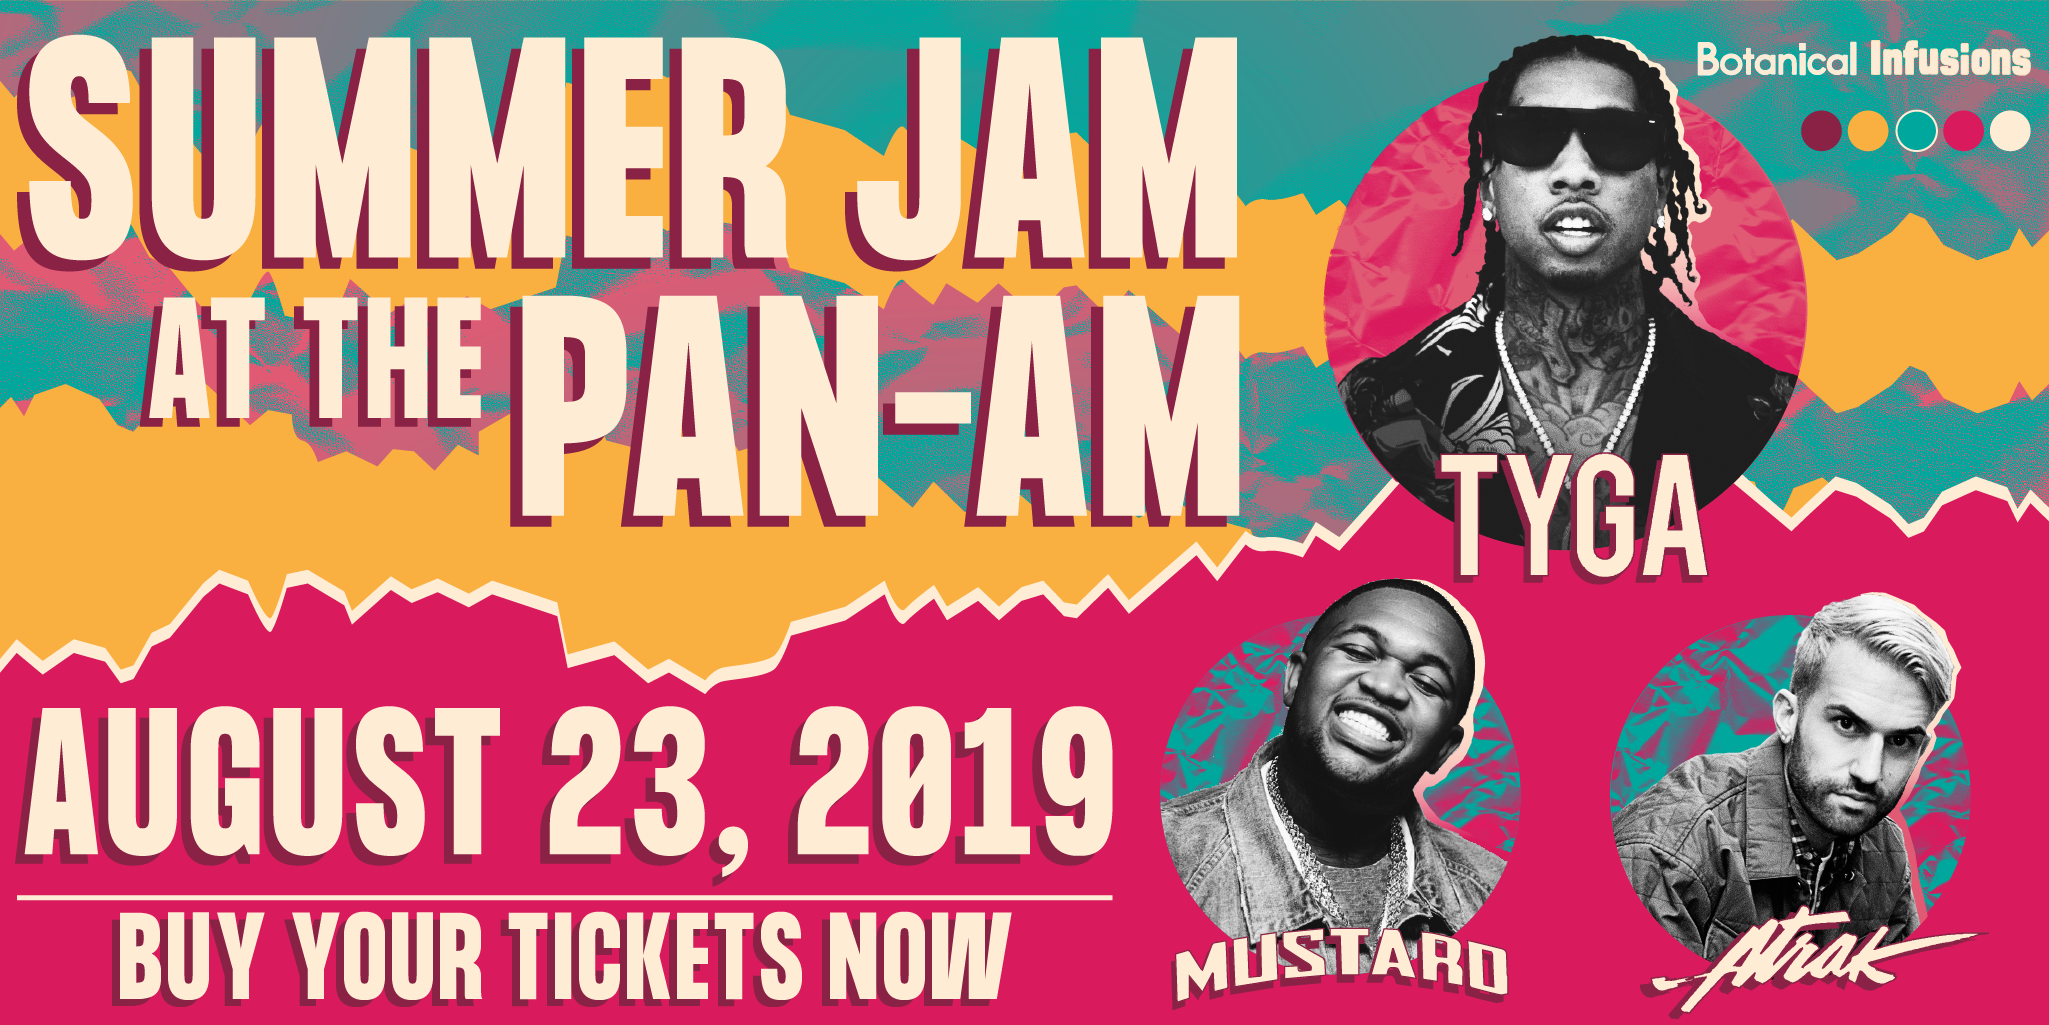 Summer Jam at the Pan-Am - Tyga, Mustard, & A-Trak, Doña Ana, New Mexico, United States